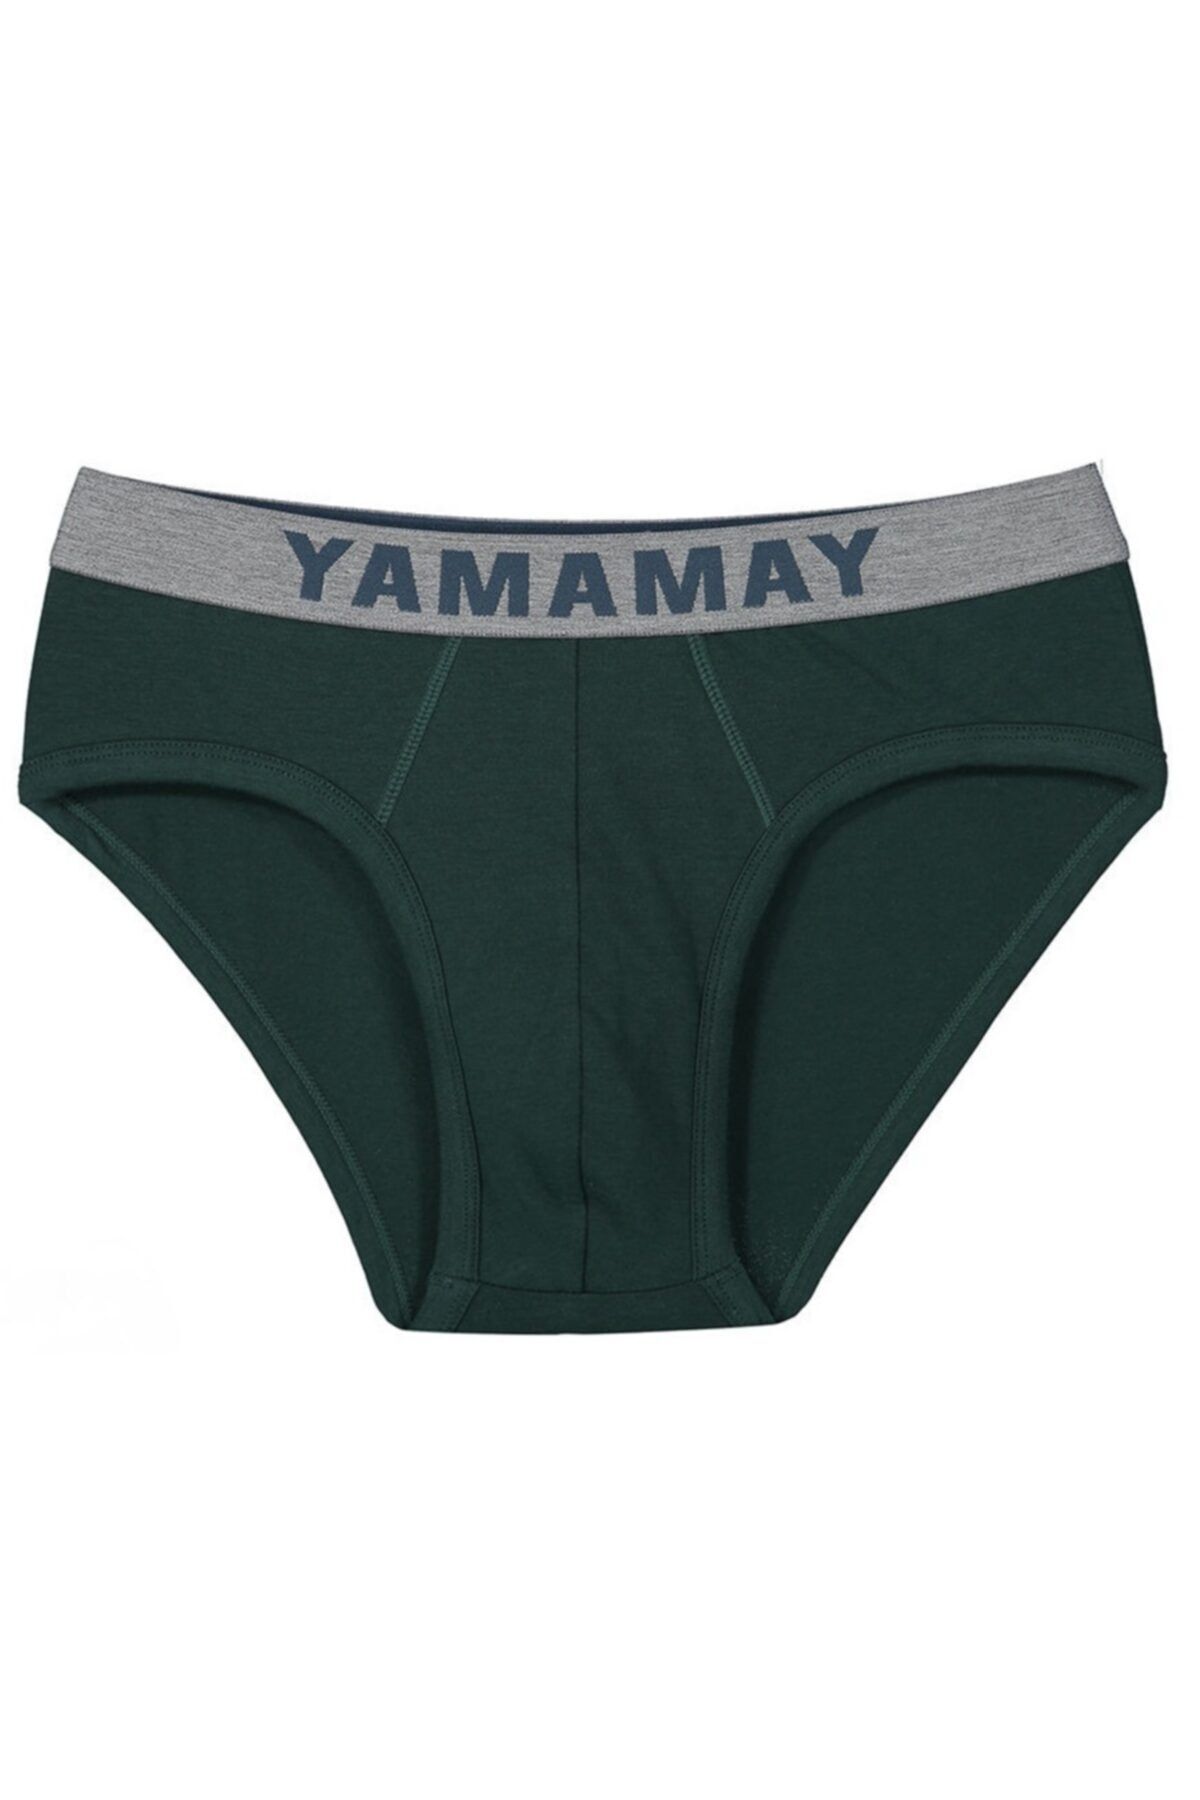 Yamamay Slip Boxer